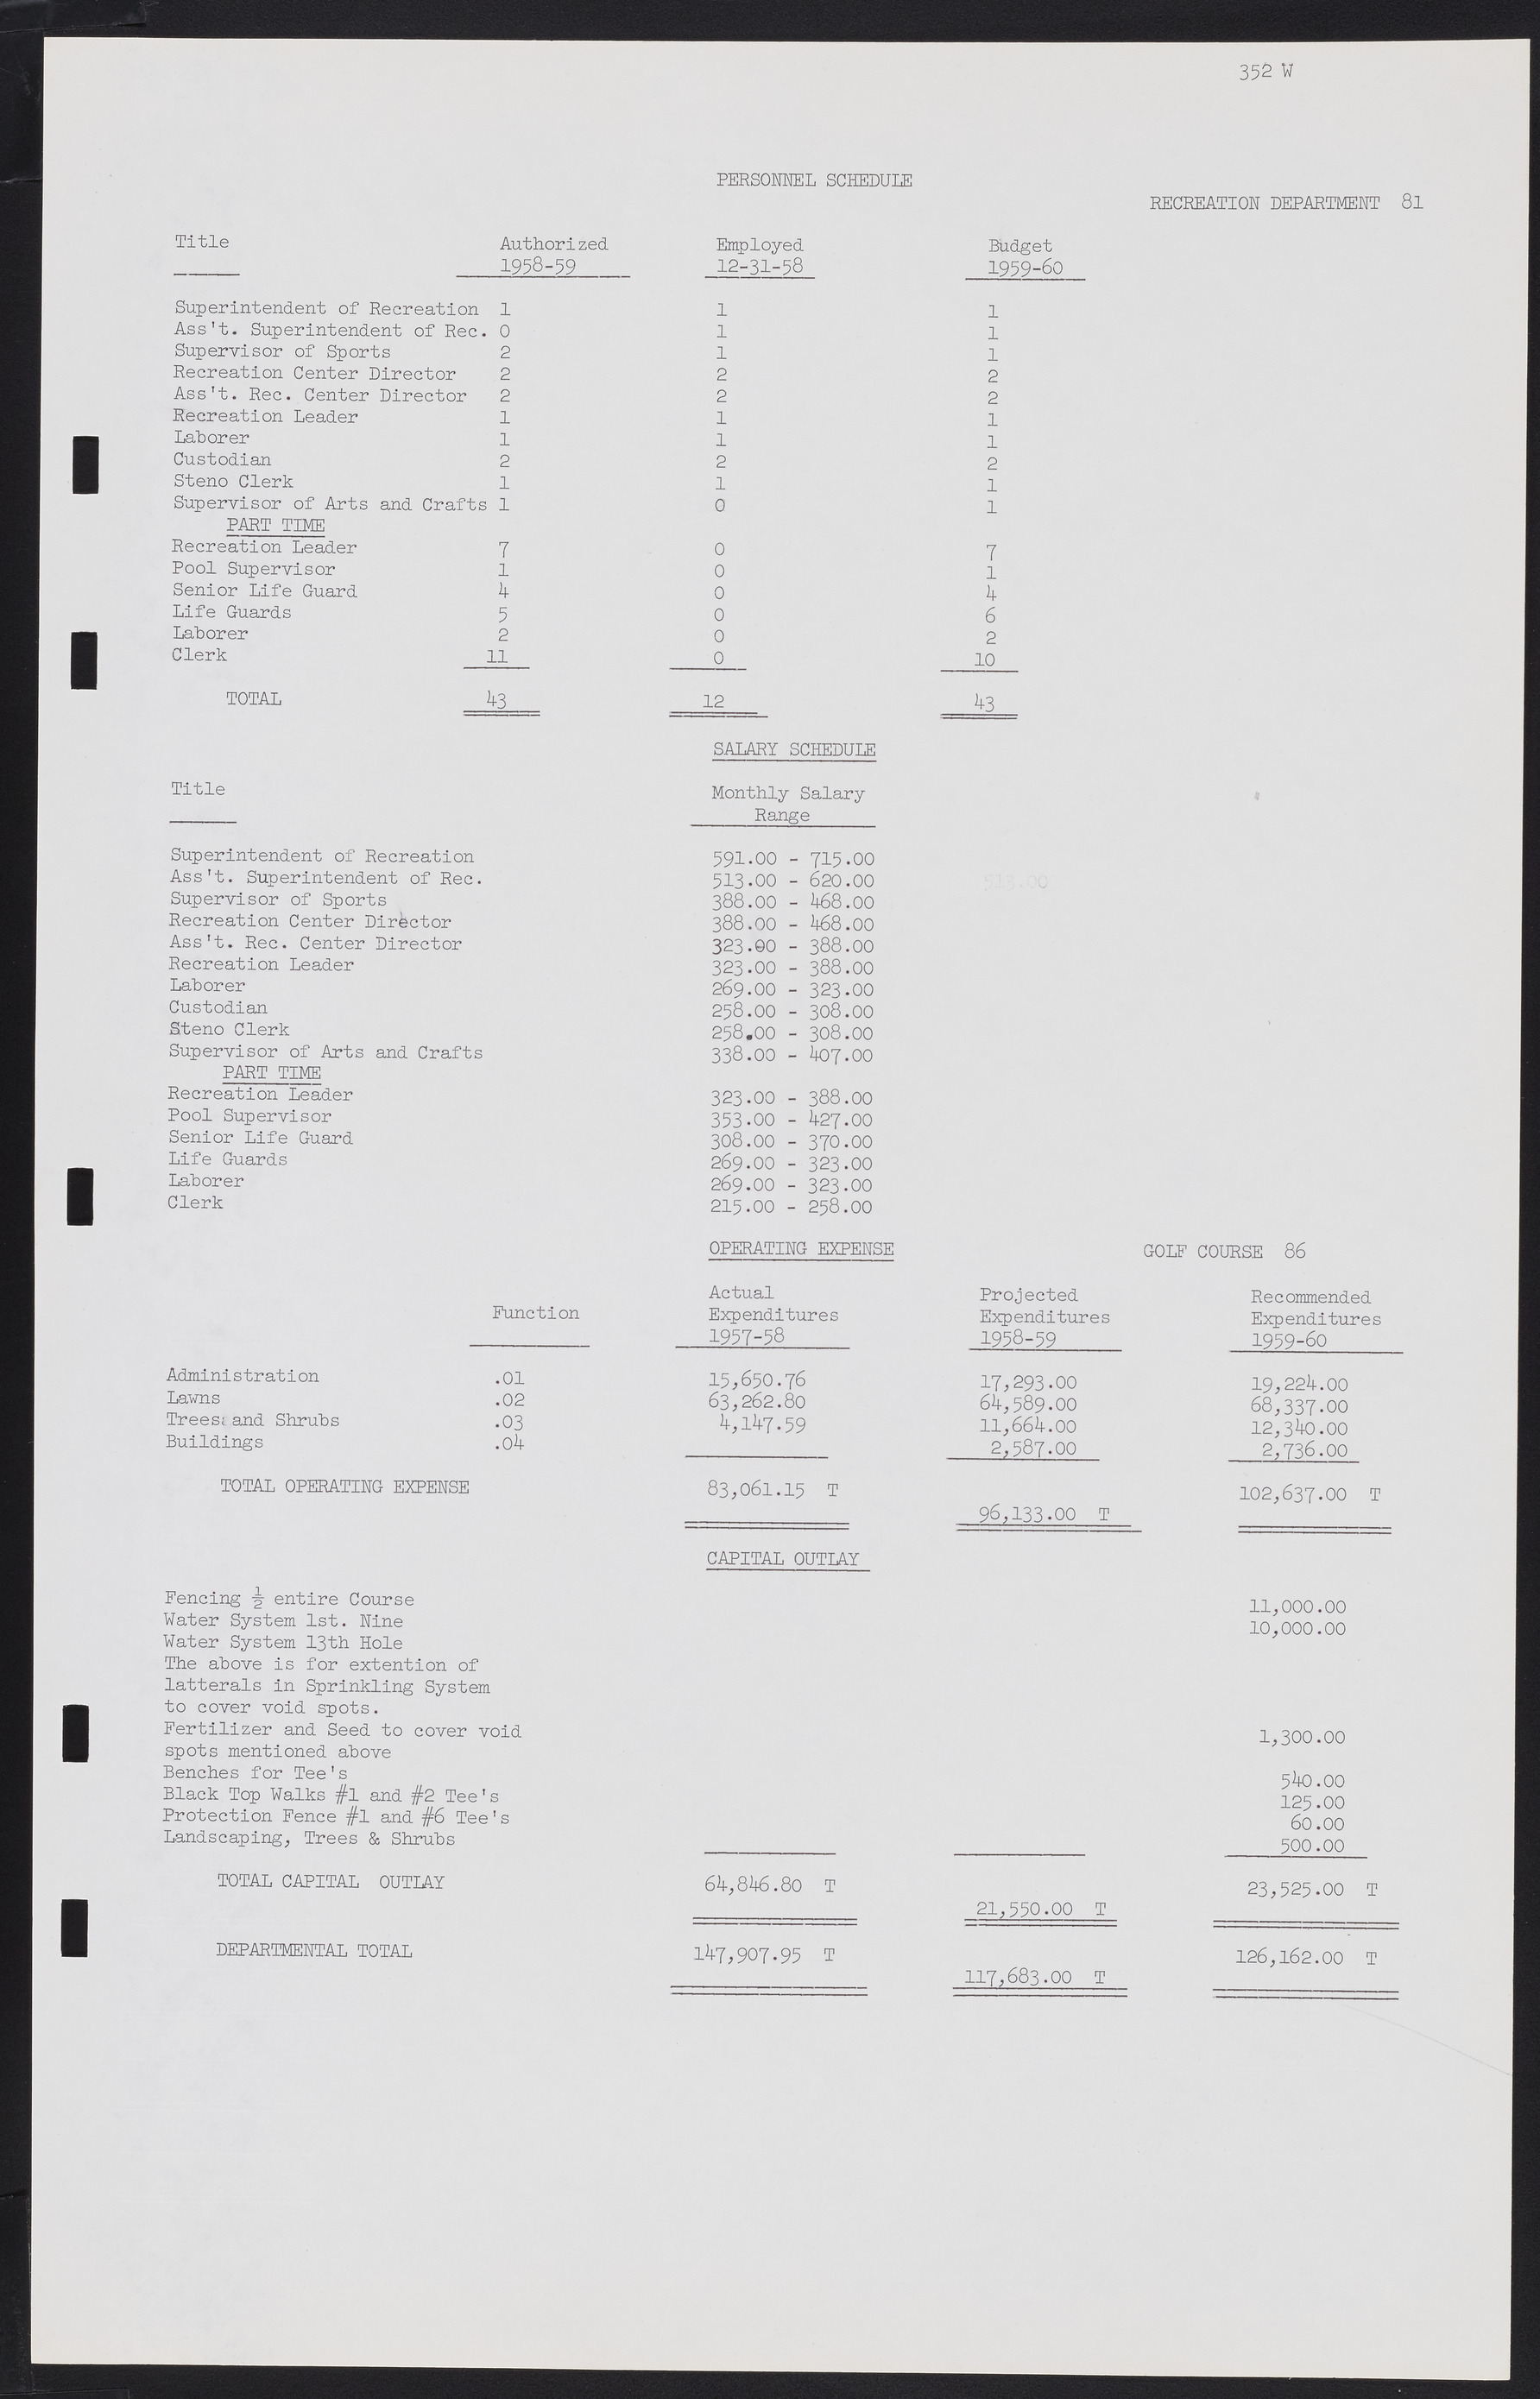 Las Vegas City Commission Minutes, November 20, 1957 to December 2, 1959, lvc000011-383